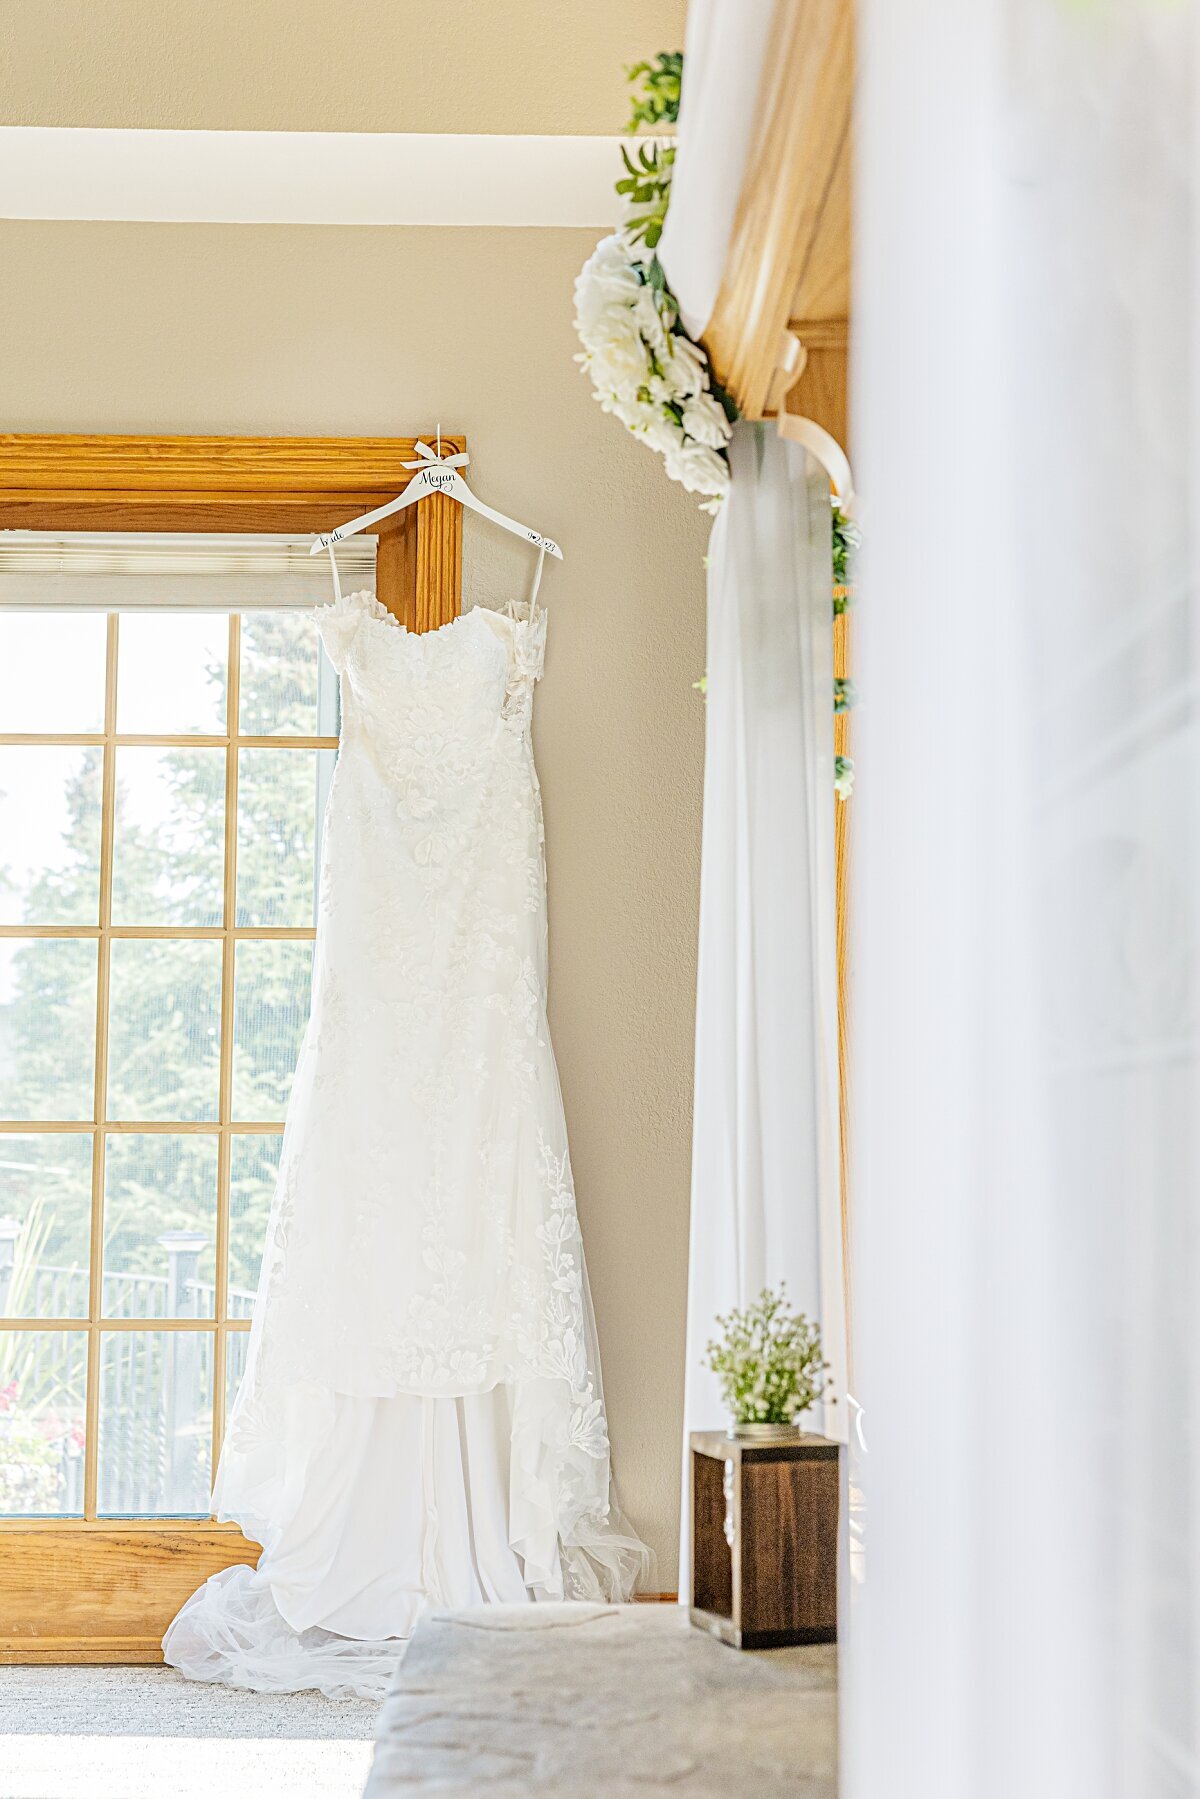 wedding-dress-hanging-from-window